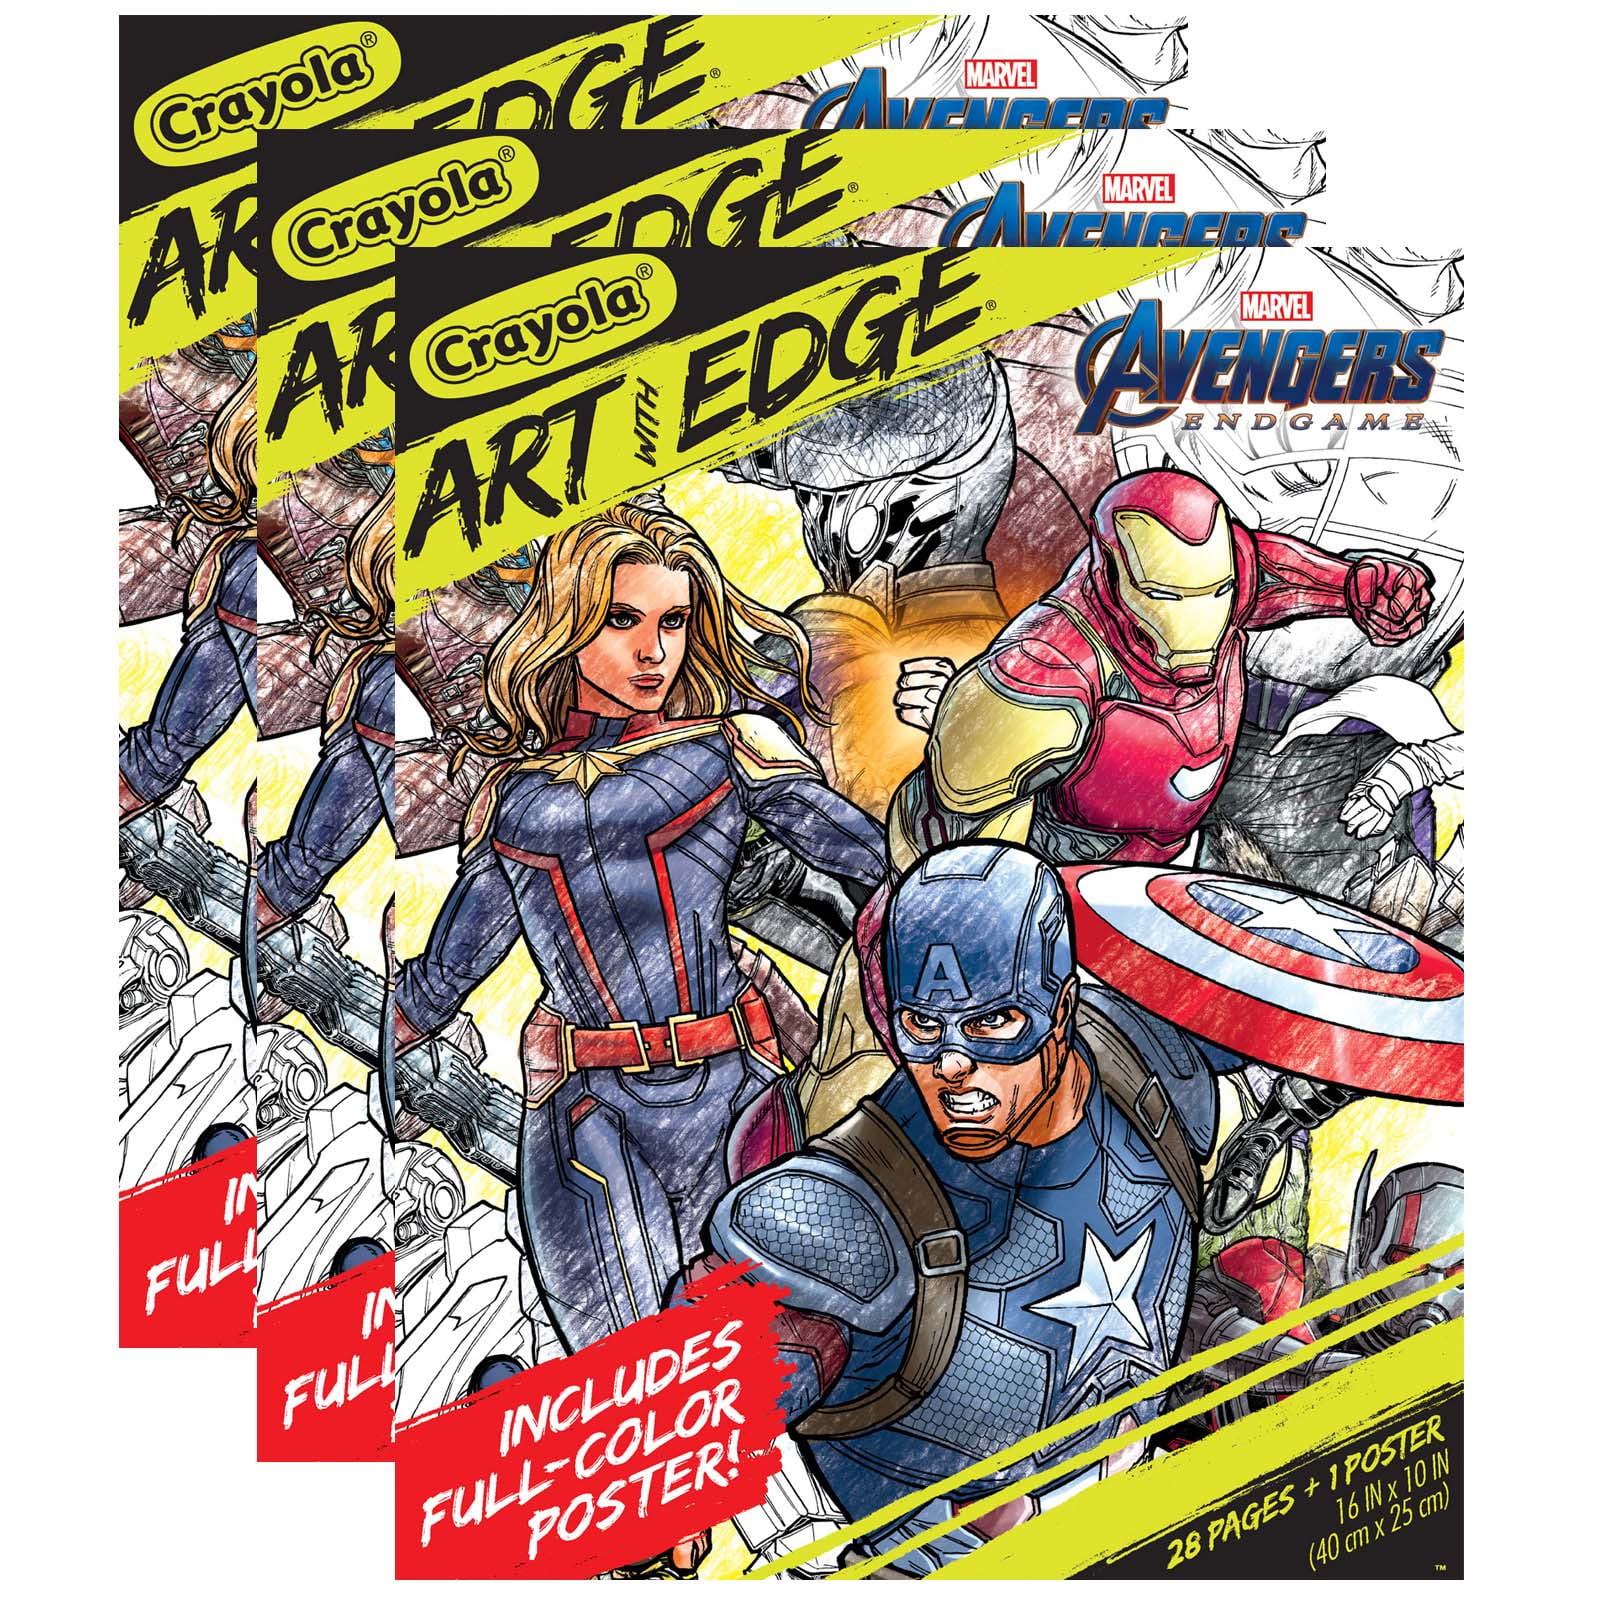 Crayola Marvel Avengers Travel Pack - 6 Washable Crayons, 40 Activity  Sheets